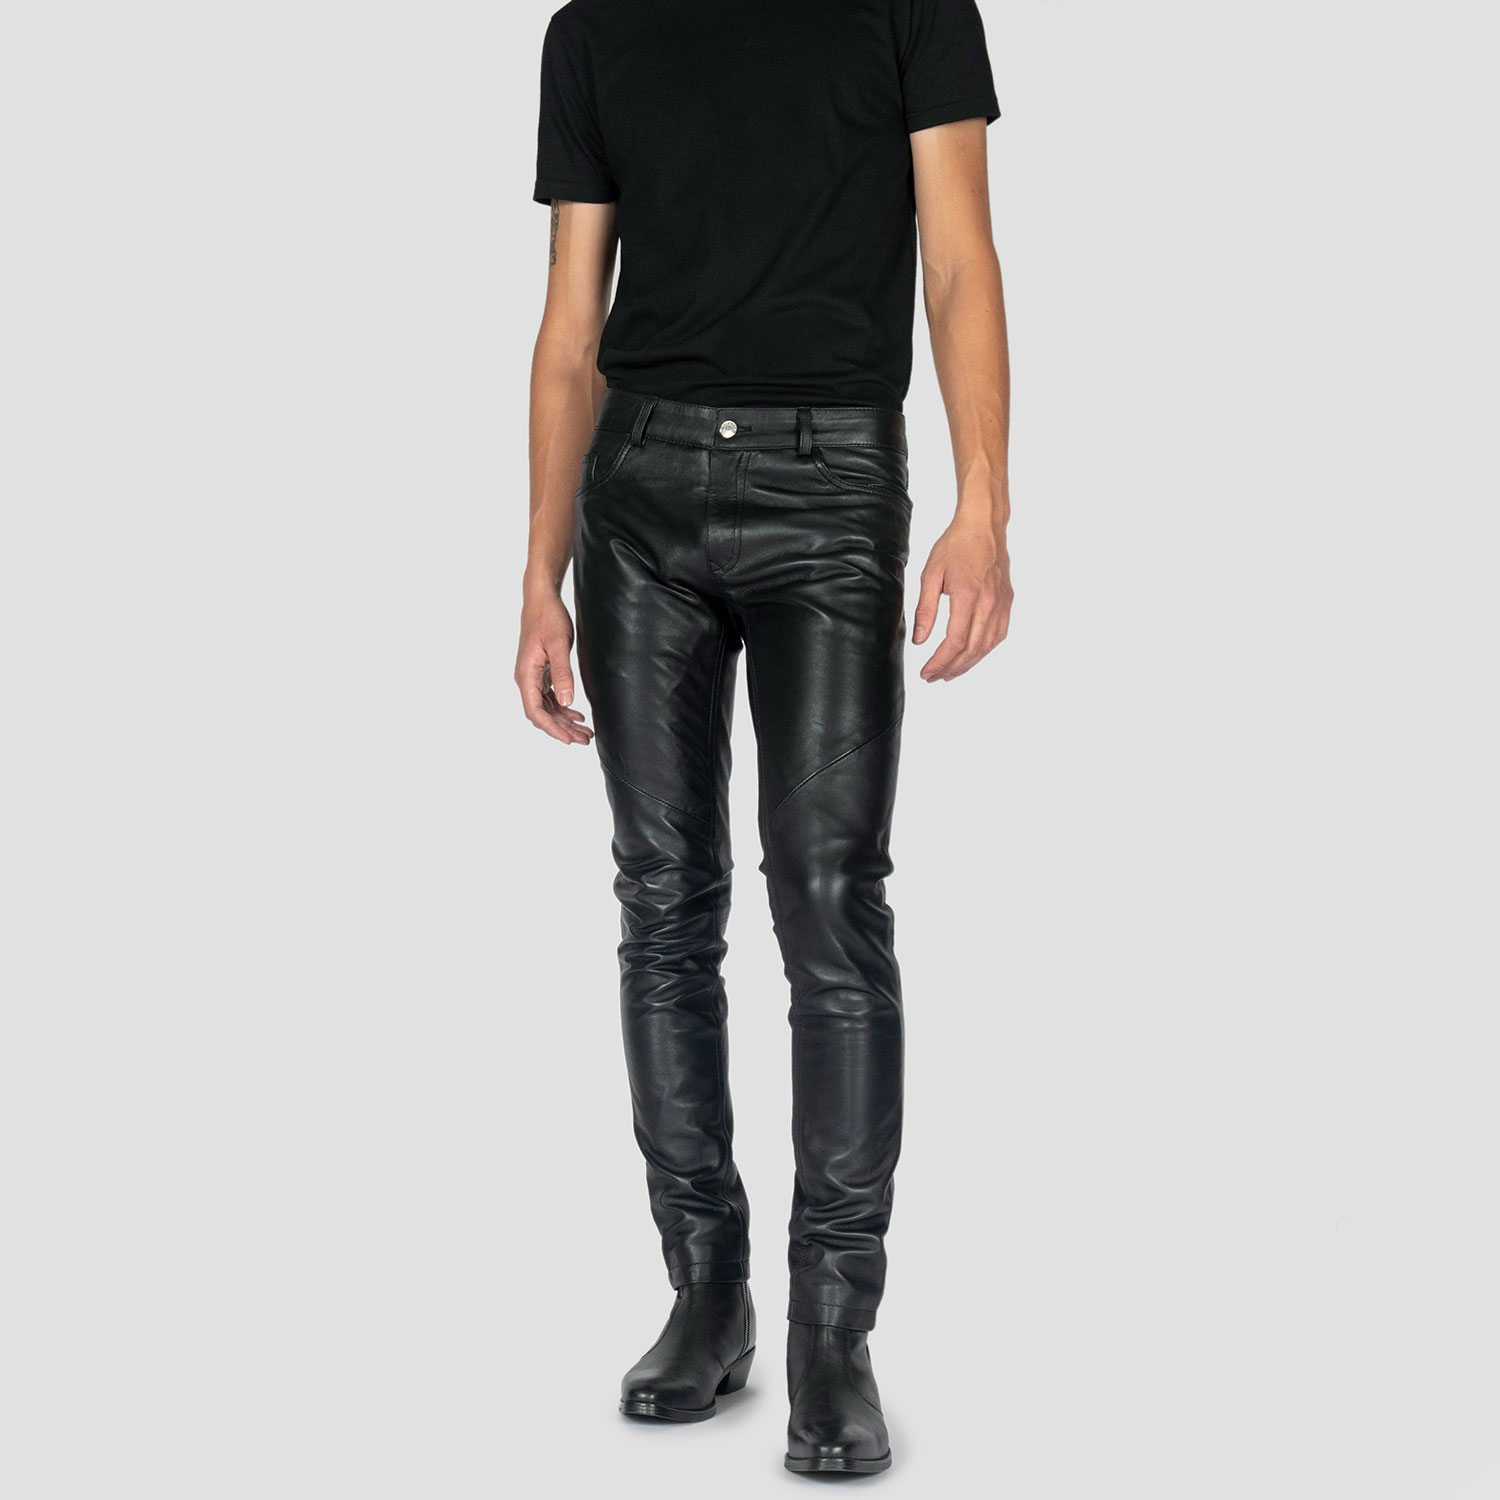  Devil Fashion Men's Stretch Tight PU Leather Pants